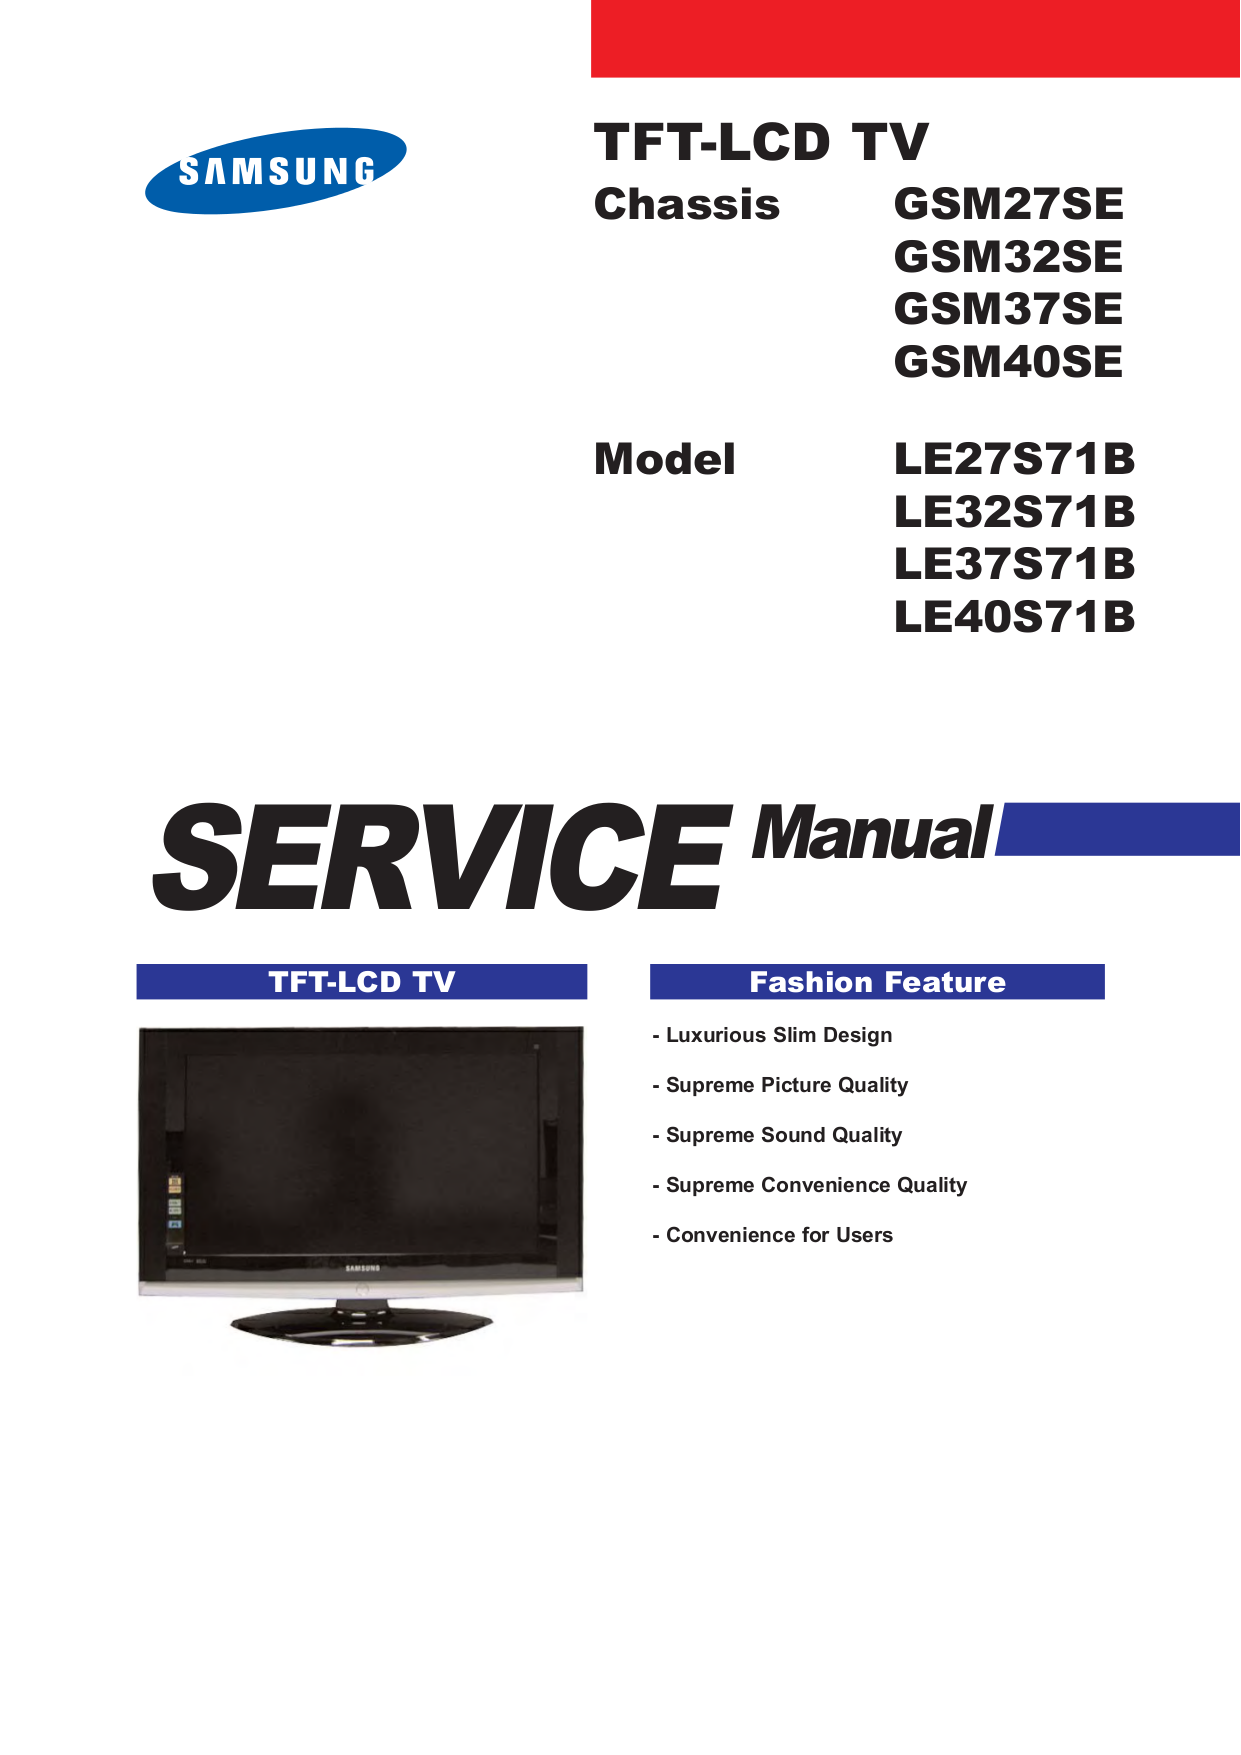 Download free pdf for Samsung LE32R51B TV manual1241 x 1755